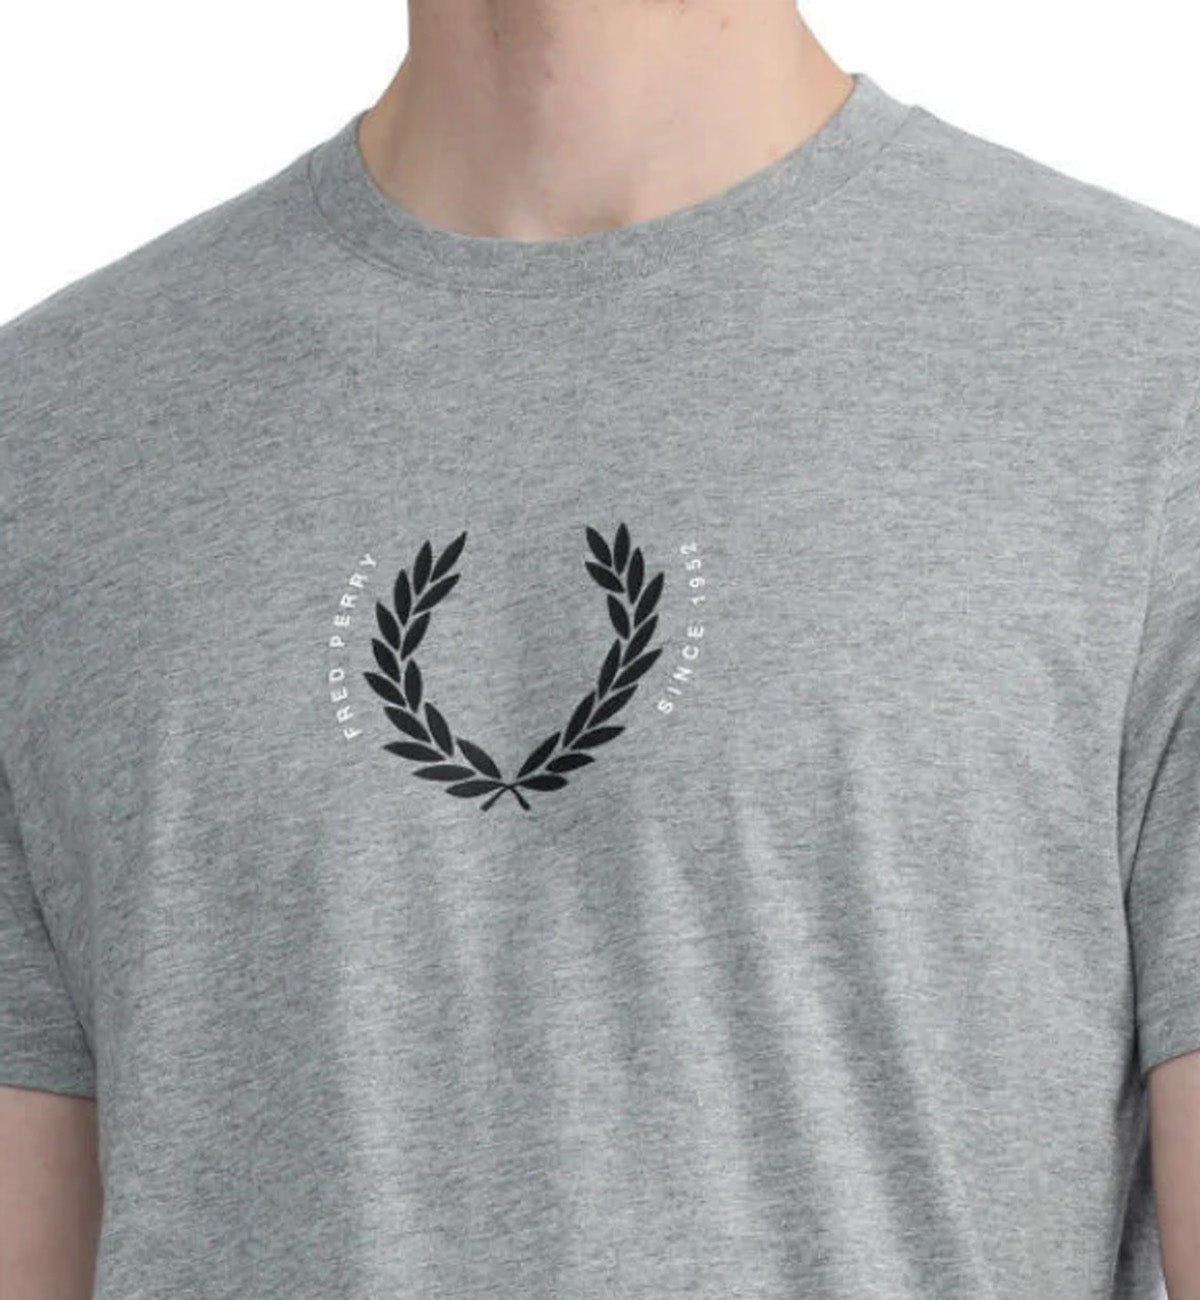 Fred Perry Laurel Wreath T-Shirt (Grey)